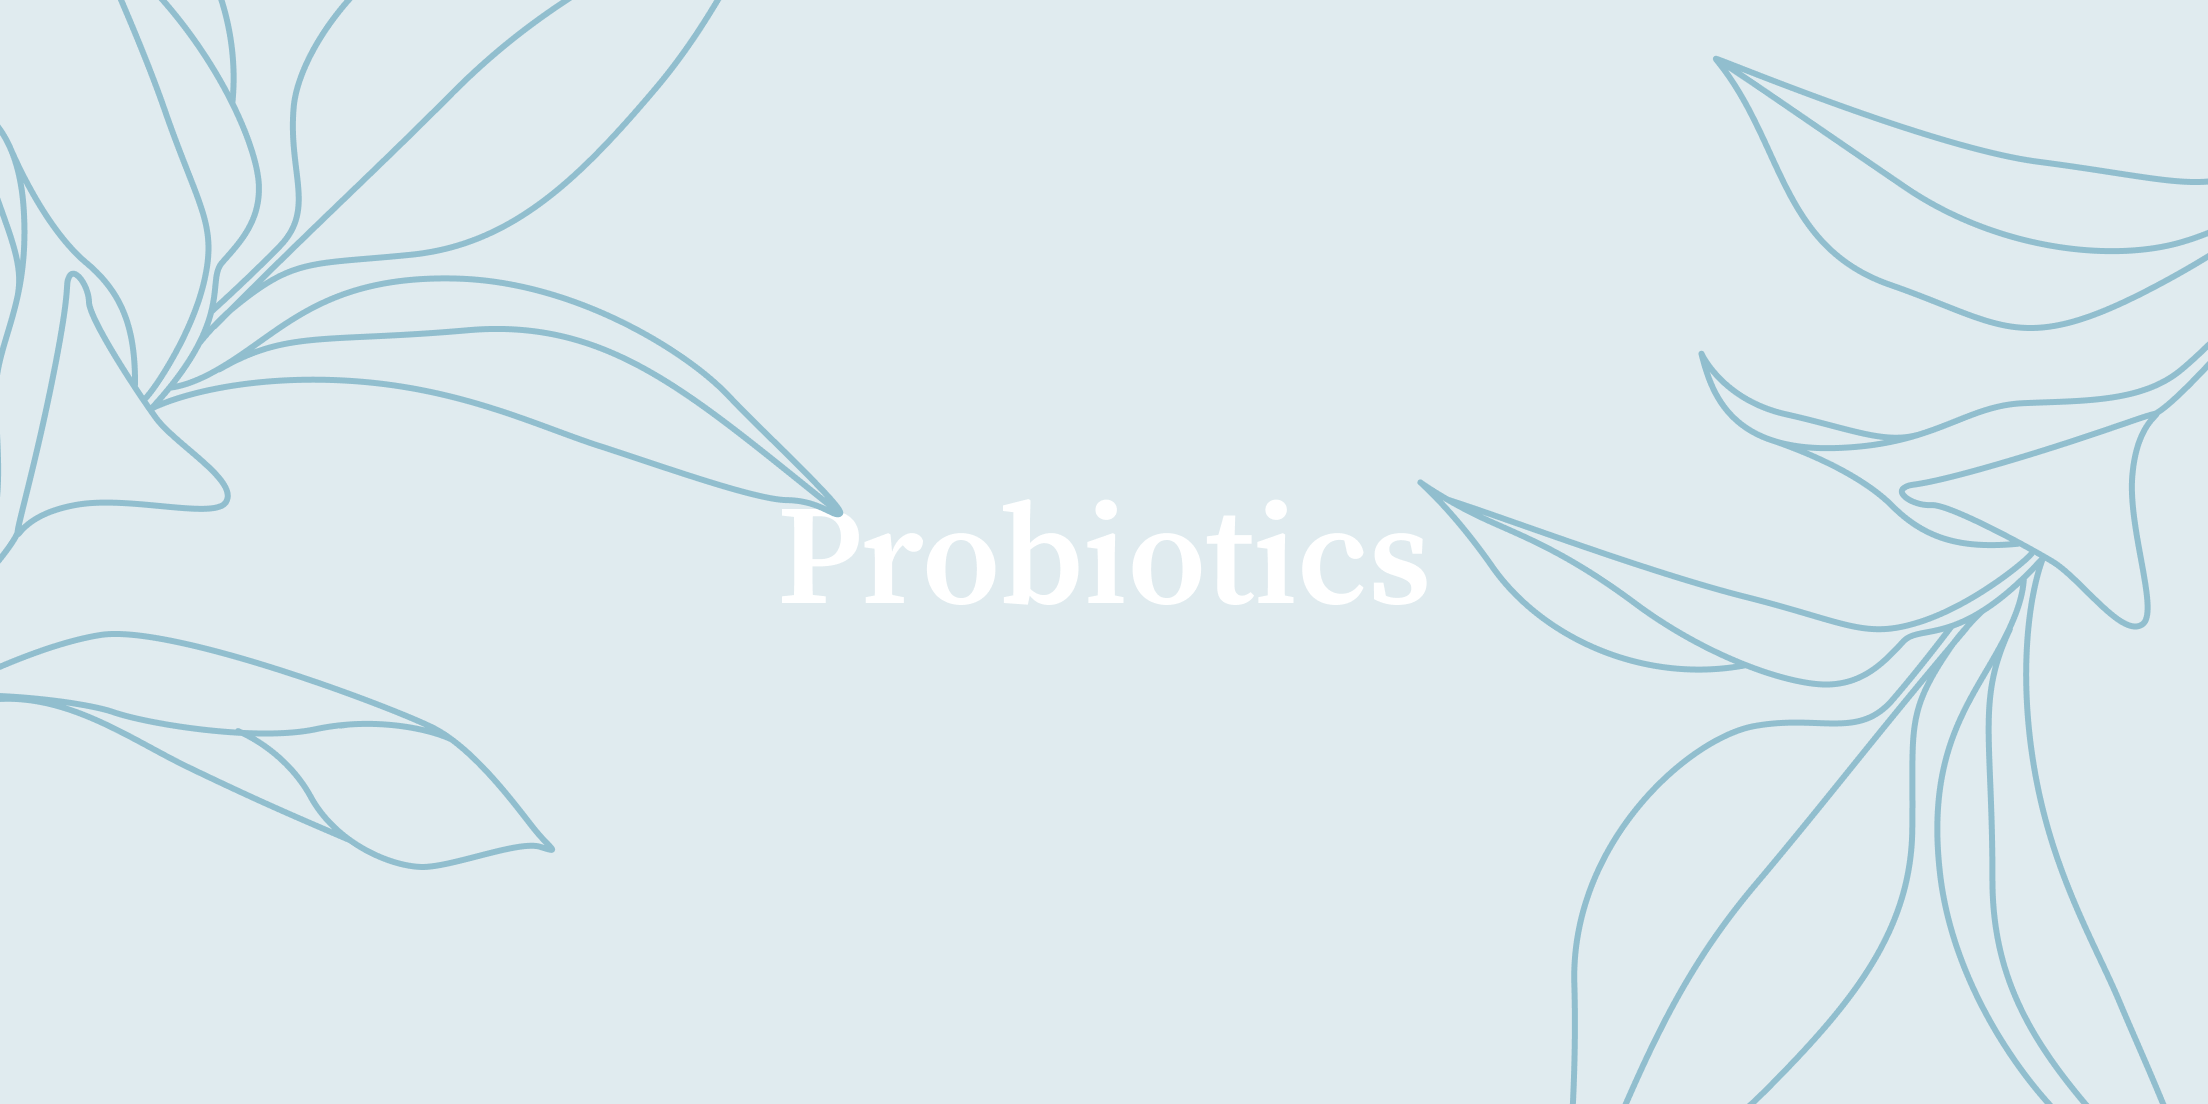 Using Probiotics as an Autism Treatment: Dos & Don’ts